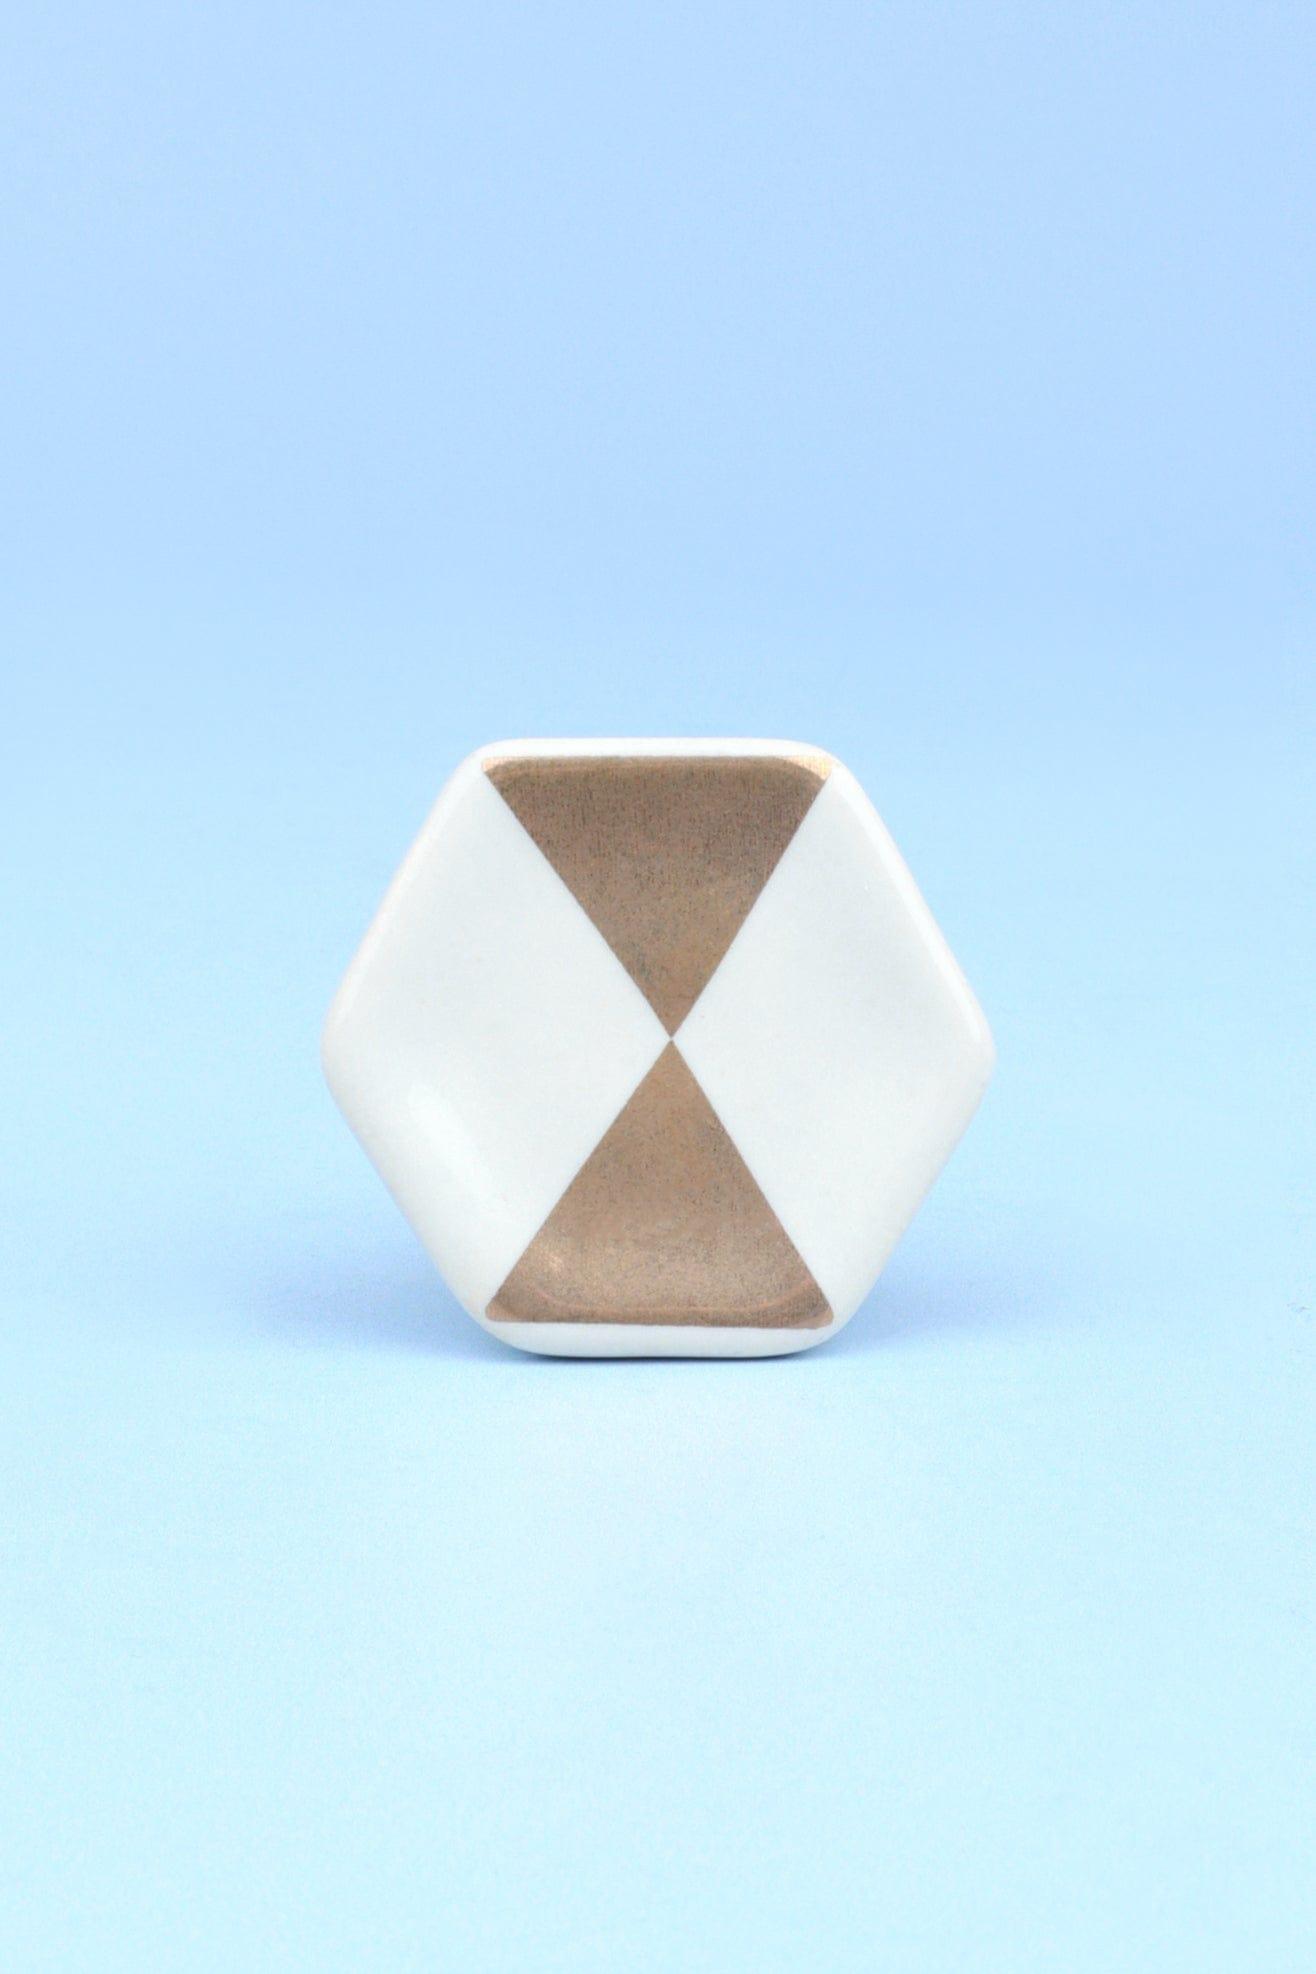 G Decor Cabinet Knobs & Handles Triangle Alma Hive Metallic Stripe Triangle Ceramic Door Knobs